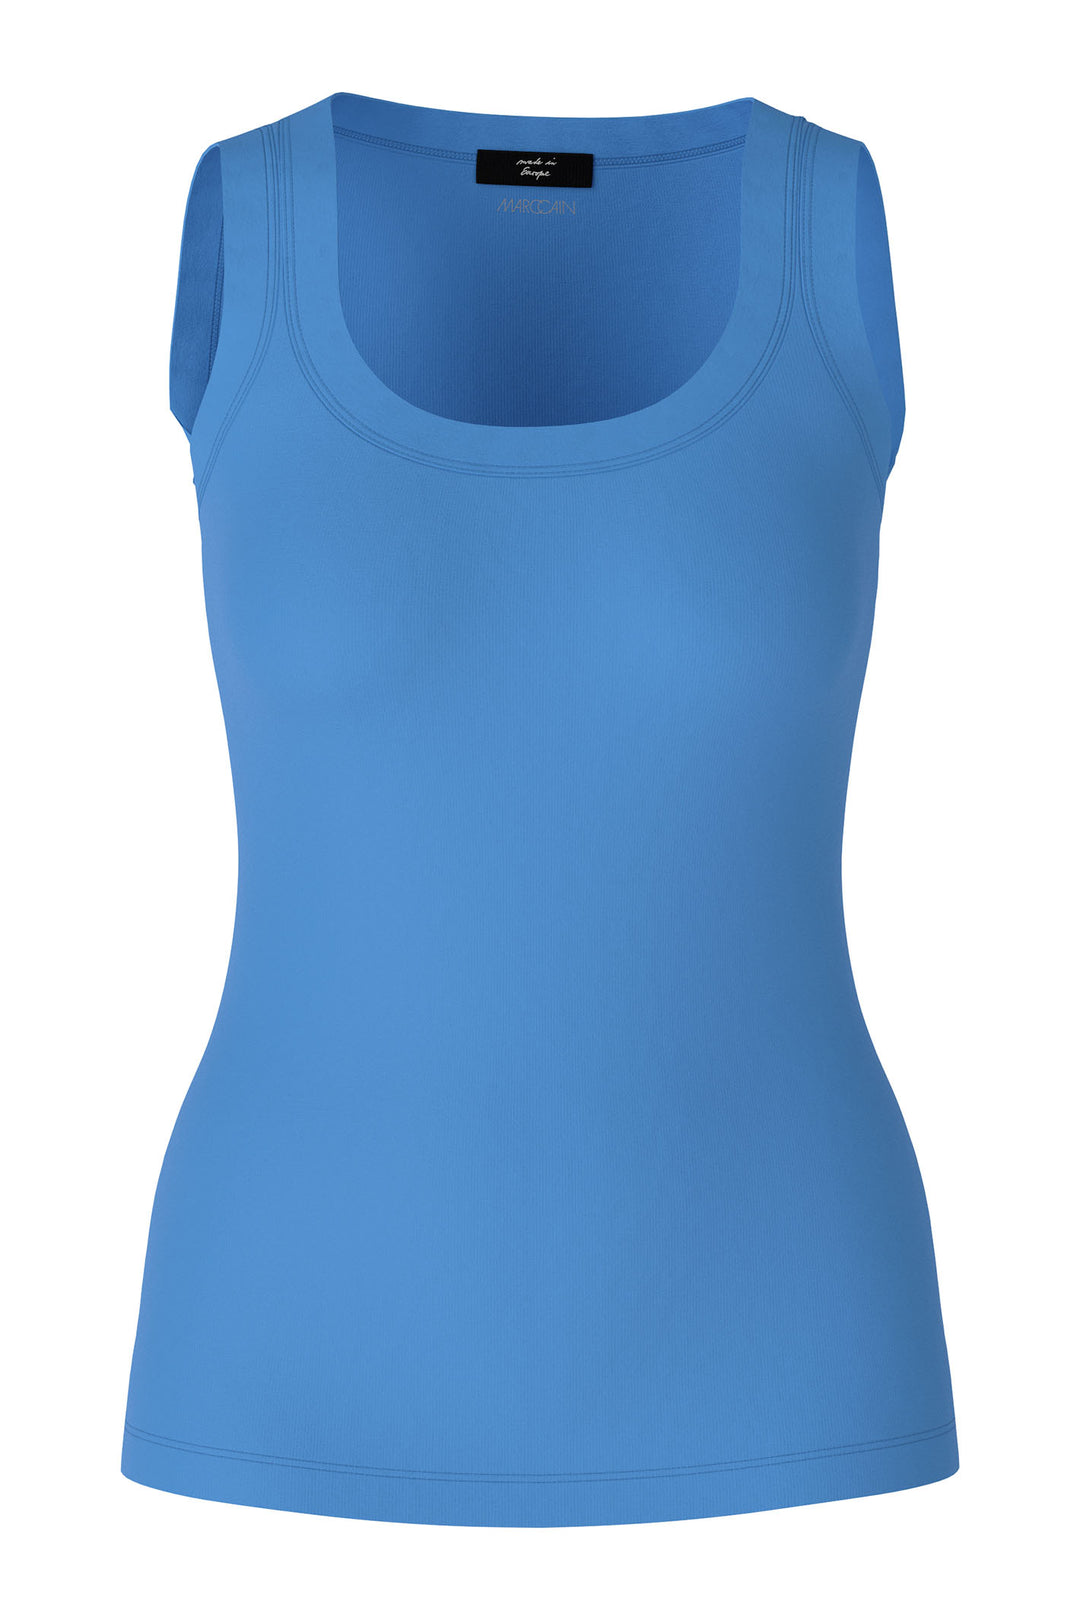 Marc Cain Sports WS 61.25 J50 363 Bright Azure Blue Vest Top - Olivia Grace Fashion